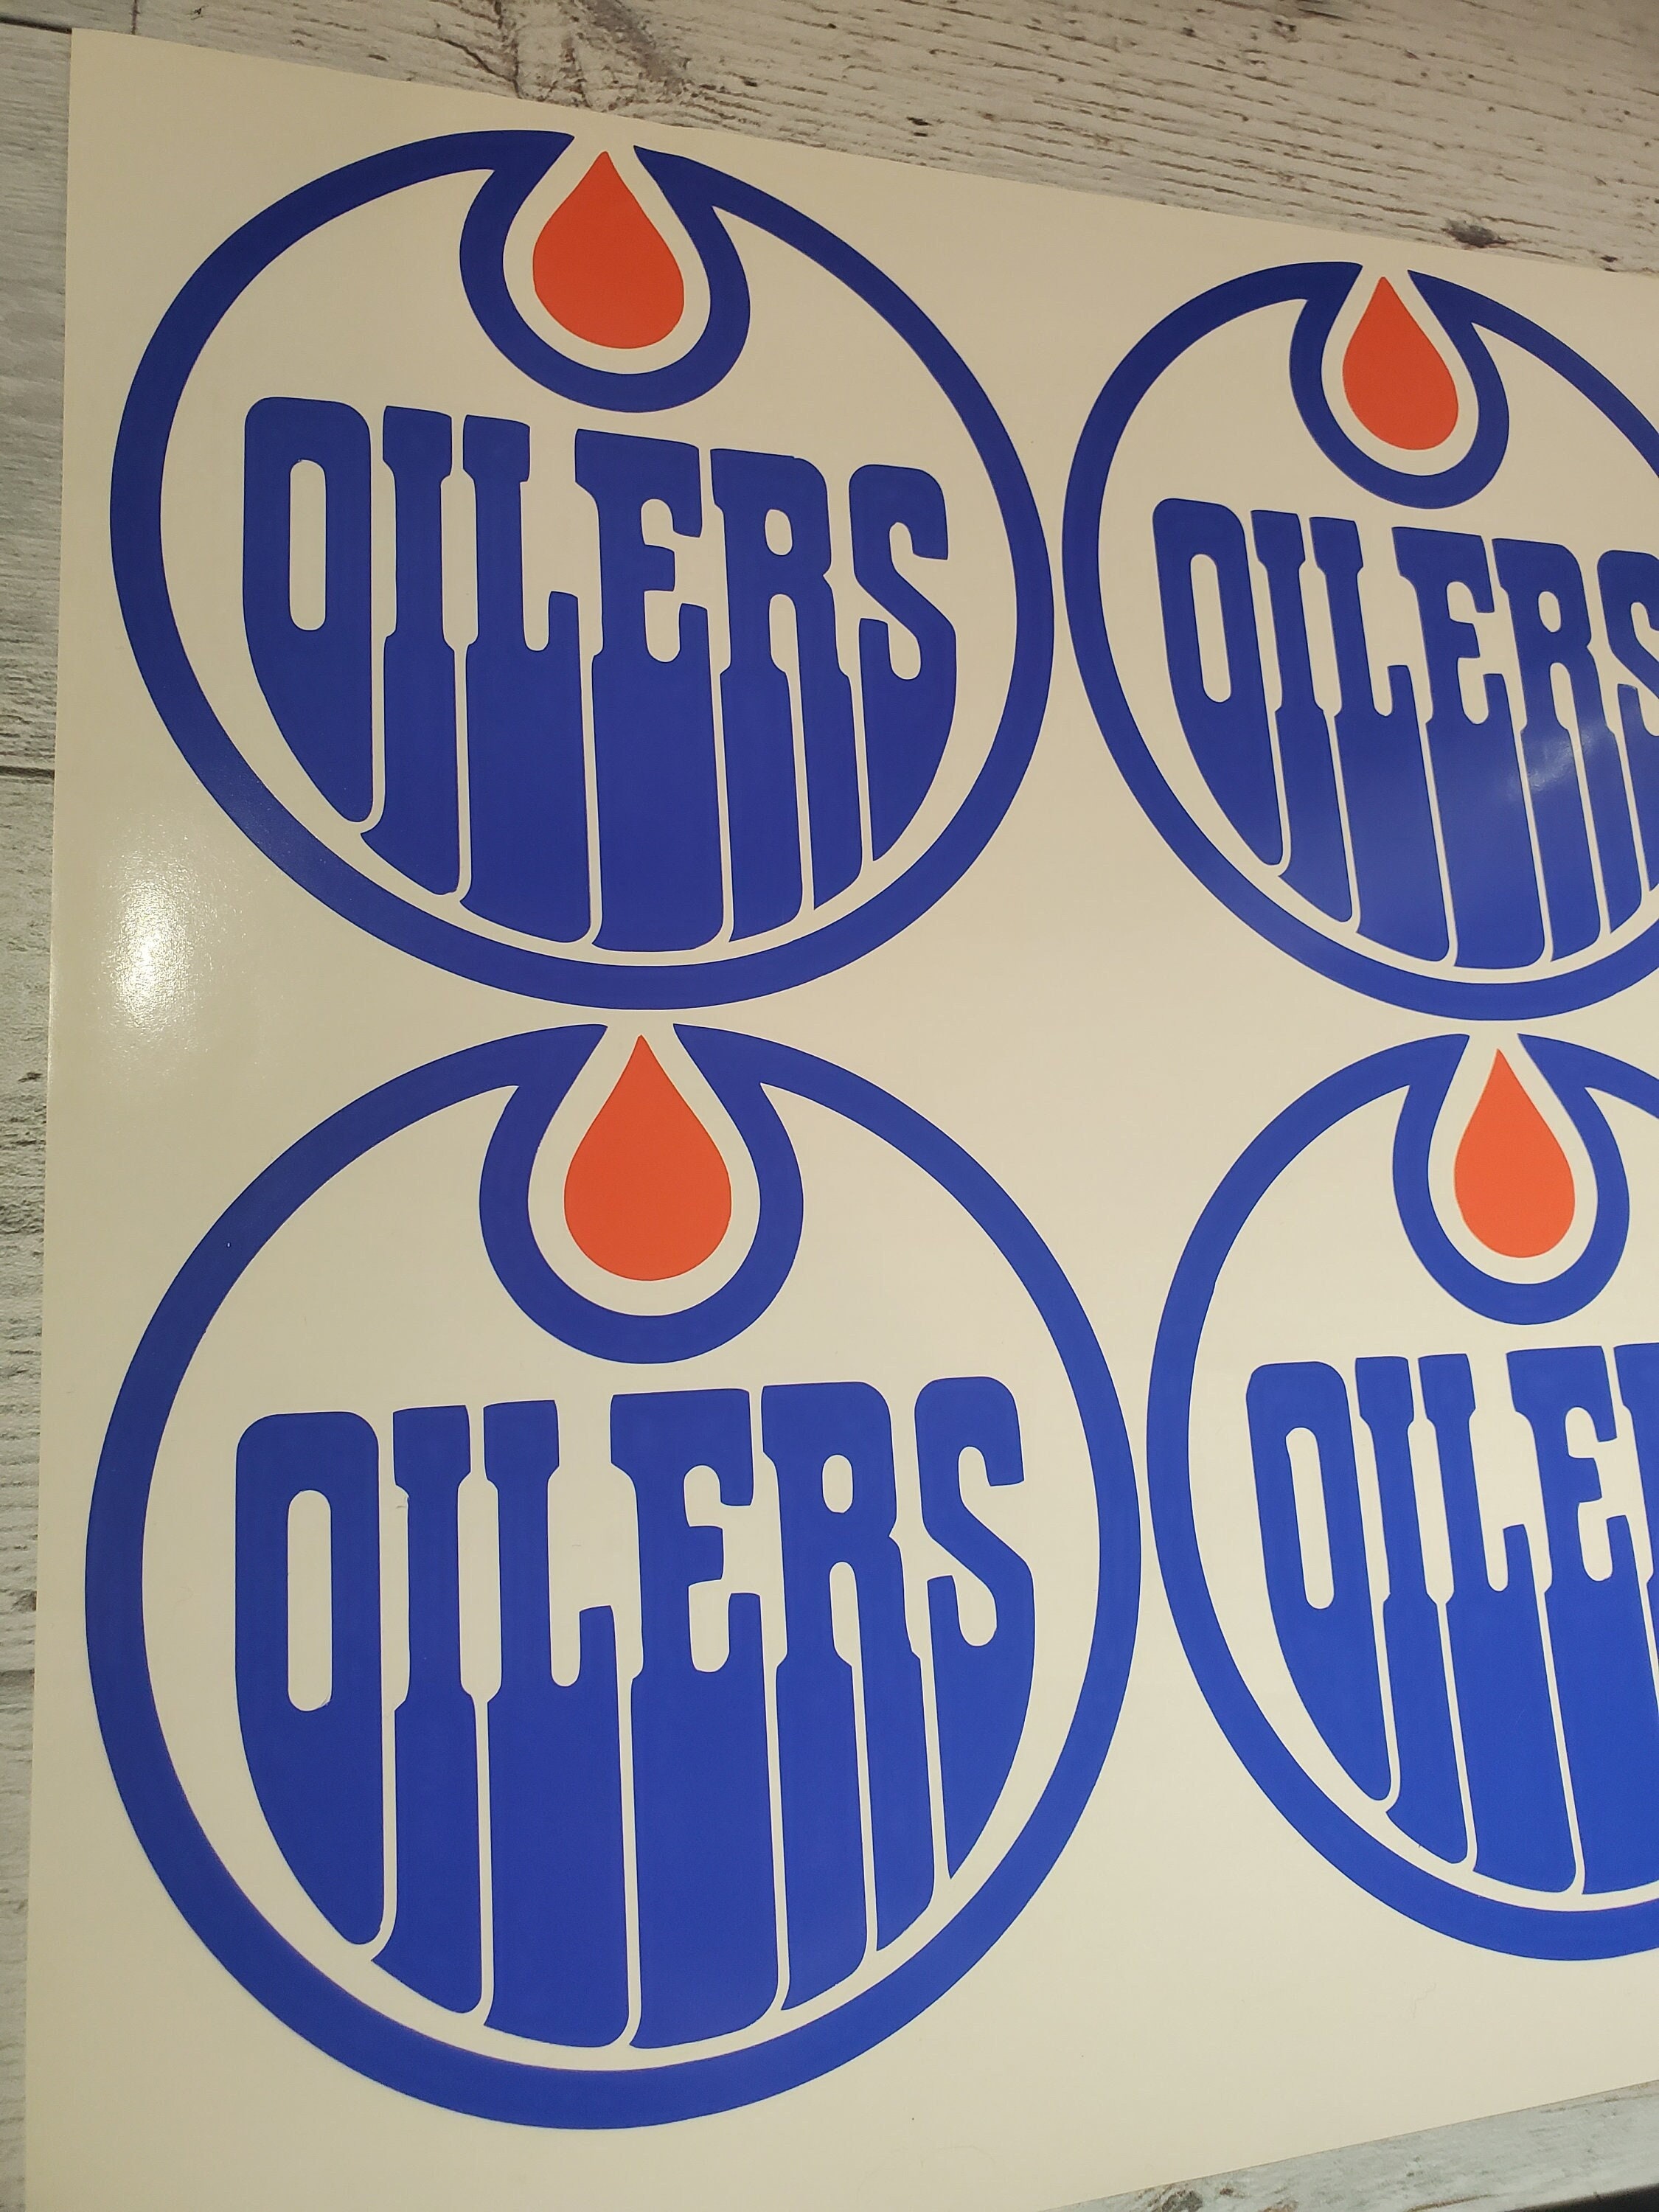 Edmonton Oilers ' Turtle Island Collection' Merchandise to Benefit